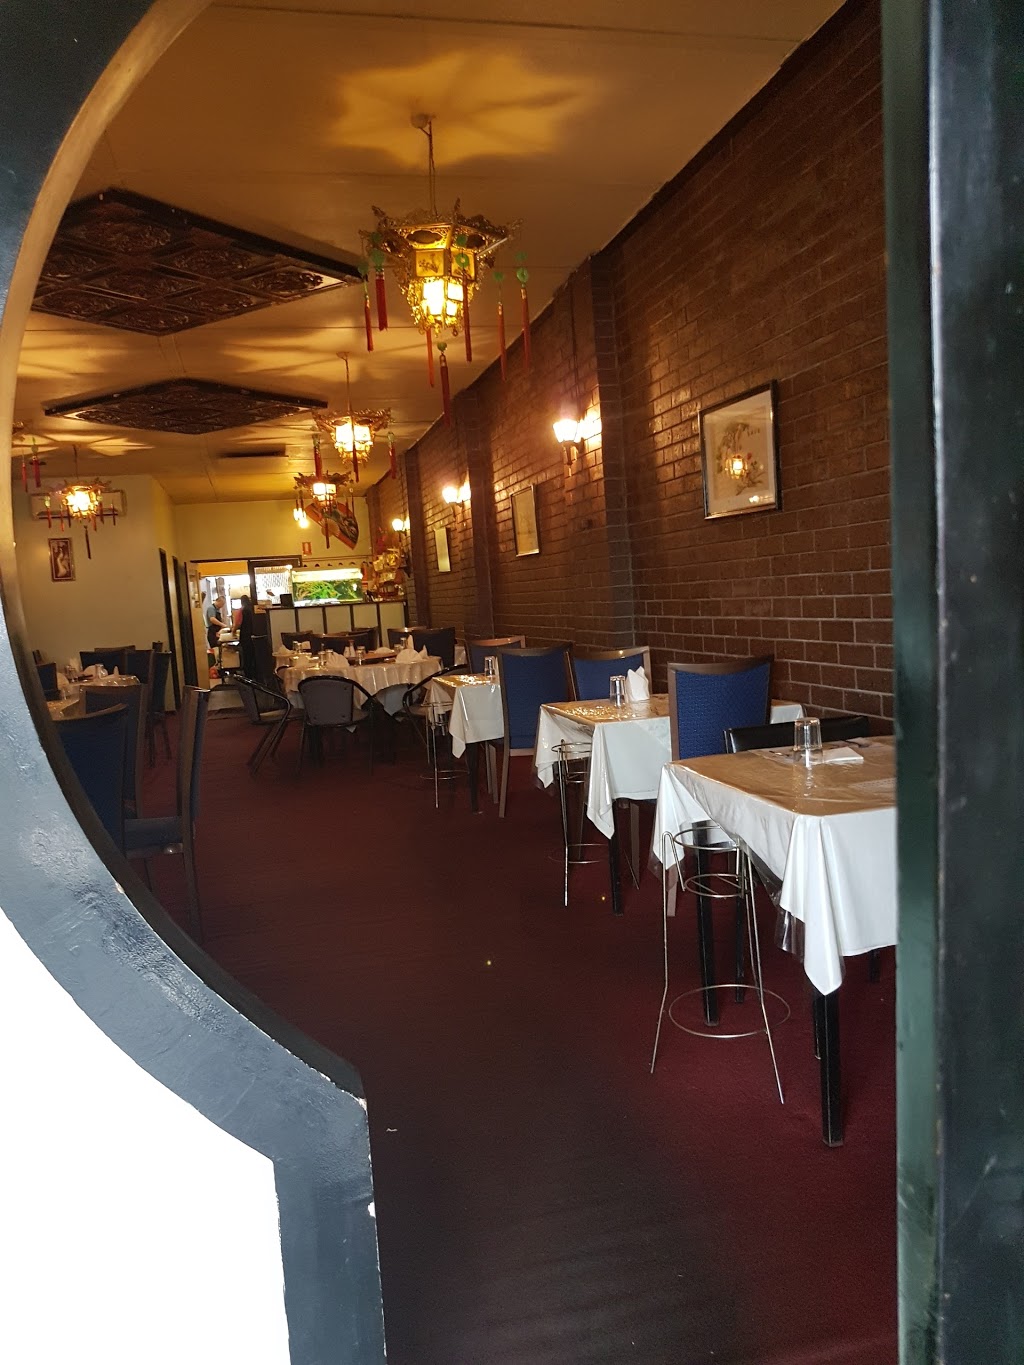 Great China Inn | restaurant | 35 Lloyd St, Moe VIC 3825, Australia | 0351274720 OR +61 3 5127 4720